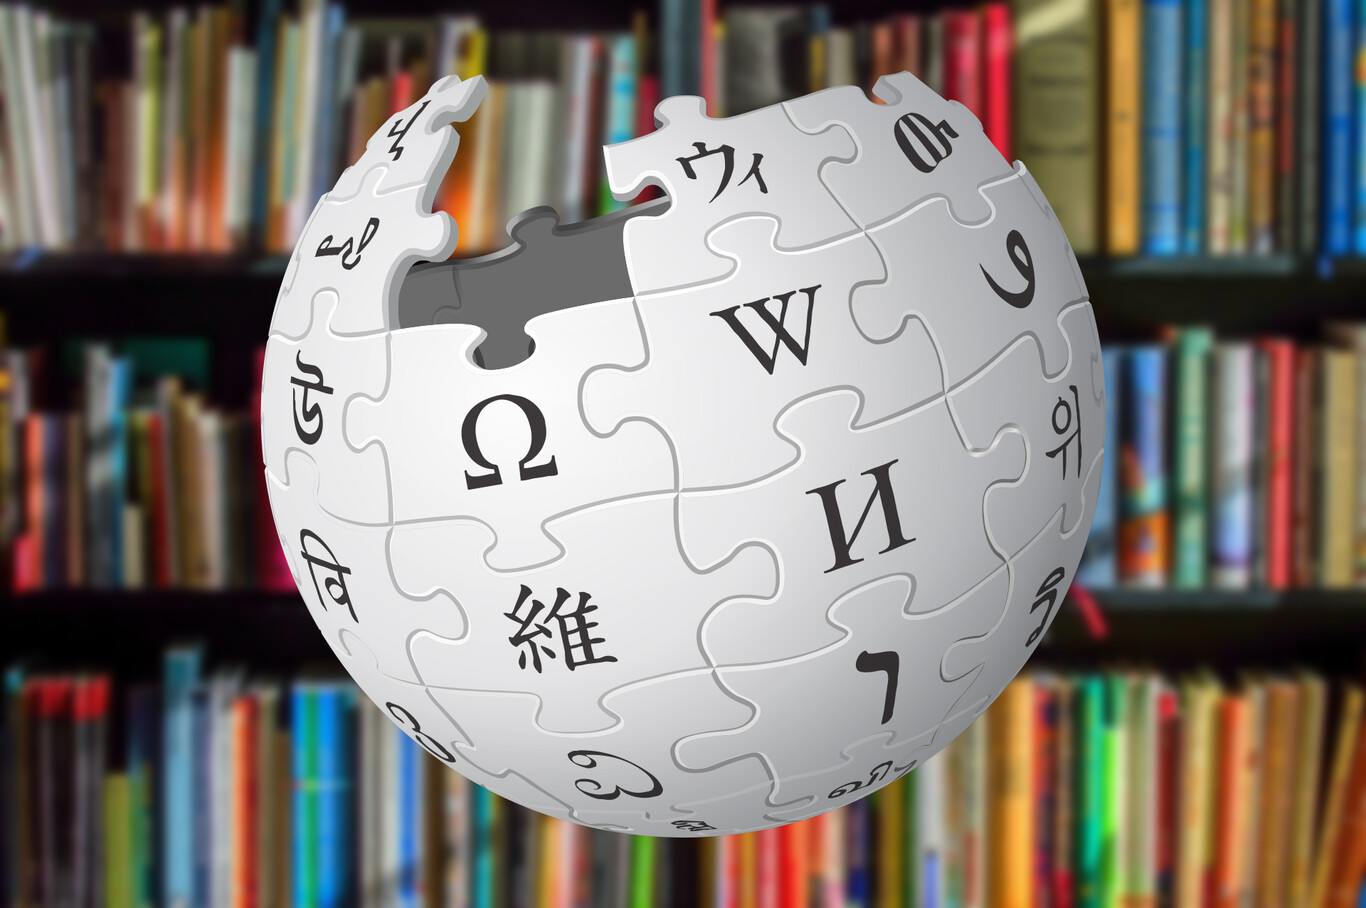 wikipedia-en-espa-ol-cumple-20-a-os-con-cerca-de-1-7-millones-de